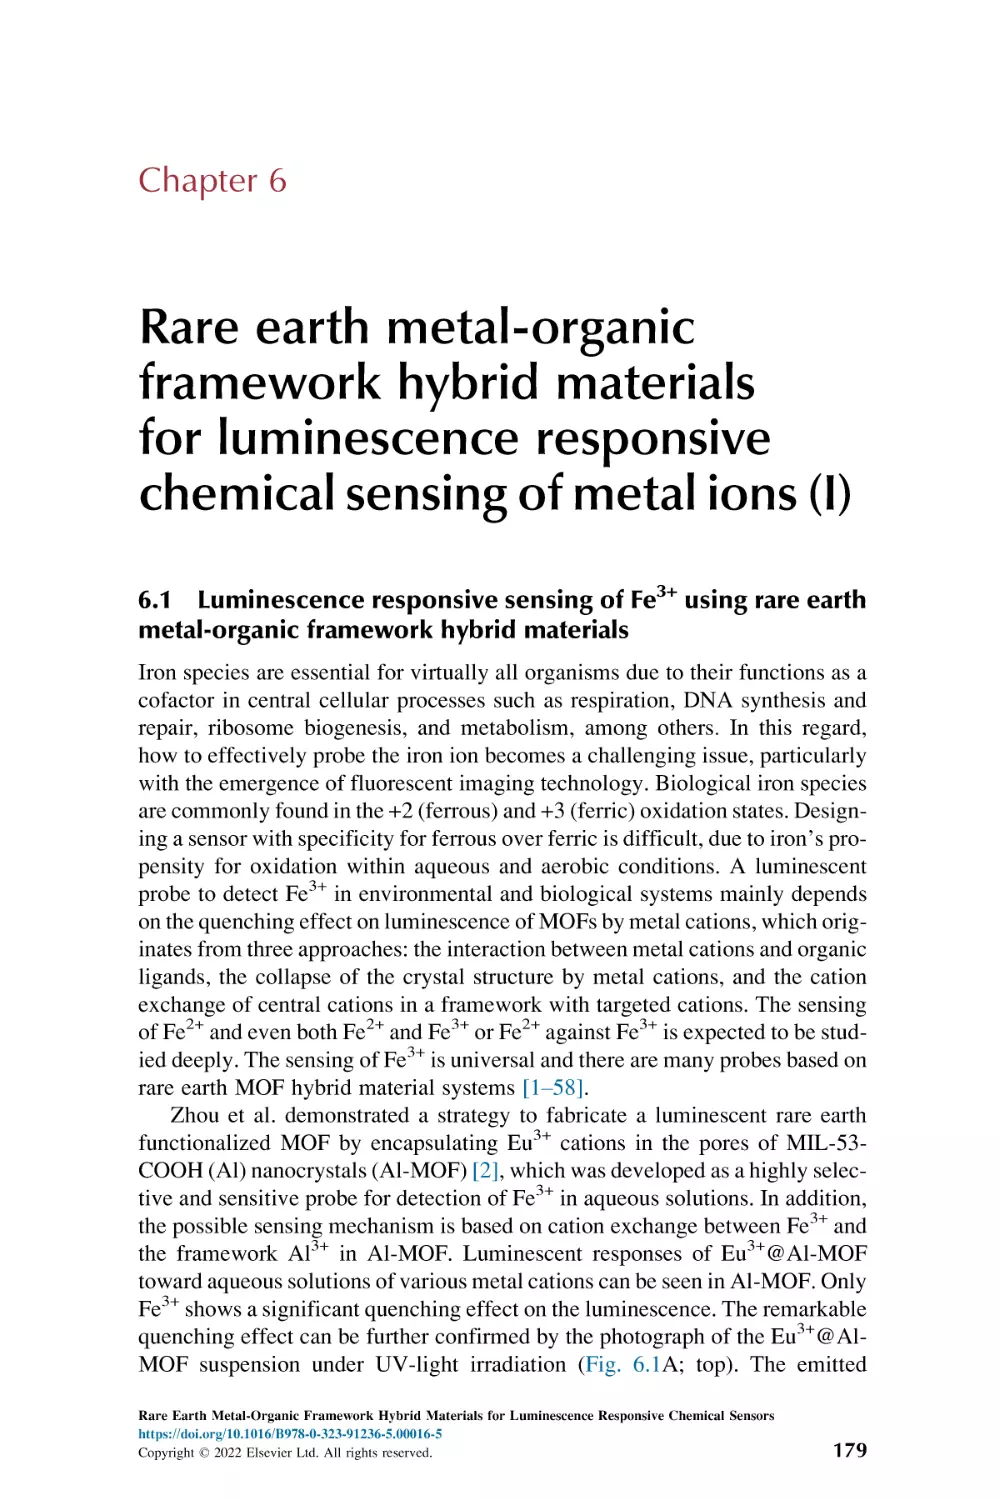 Chapter 6
6.1. Luminescence responsive sensing of Fe3+ using rare earth metal-organic framework hybrid materials